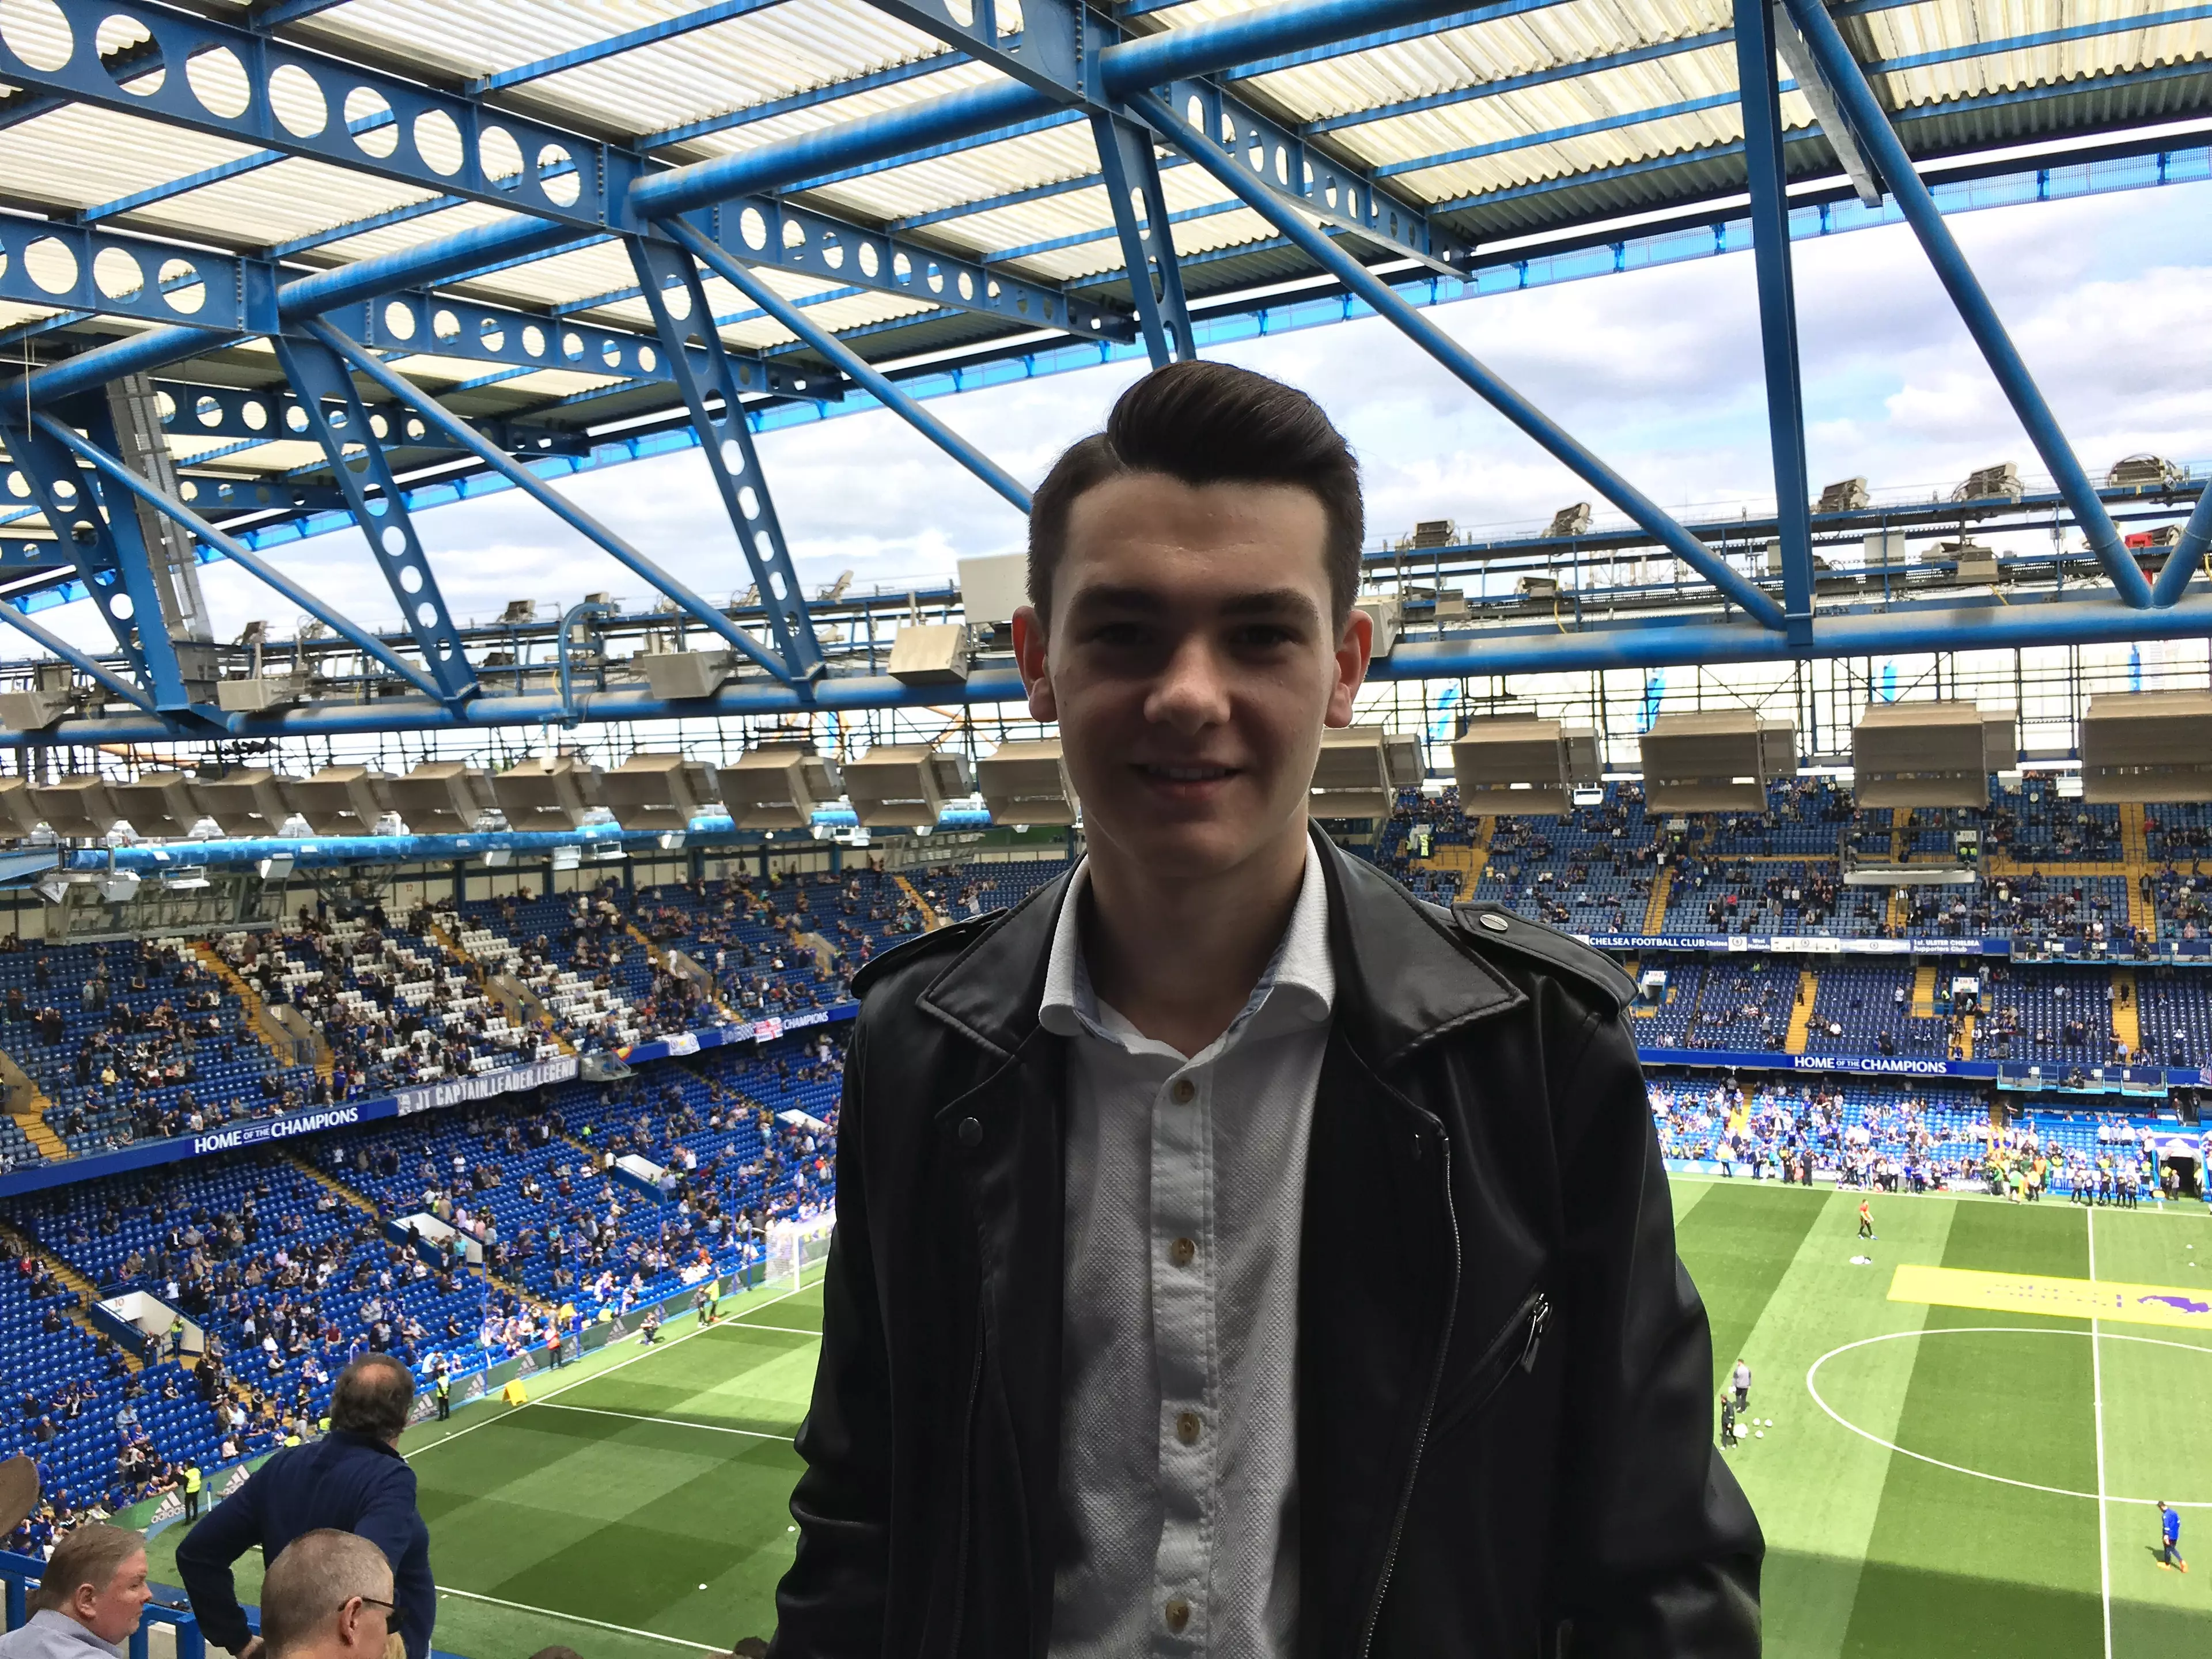 Ben has been enjoying trips to Stamford Bridge to watch Chelsea FC.